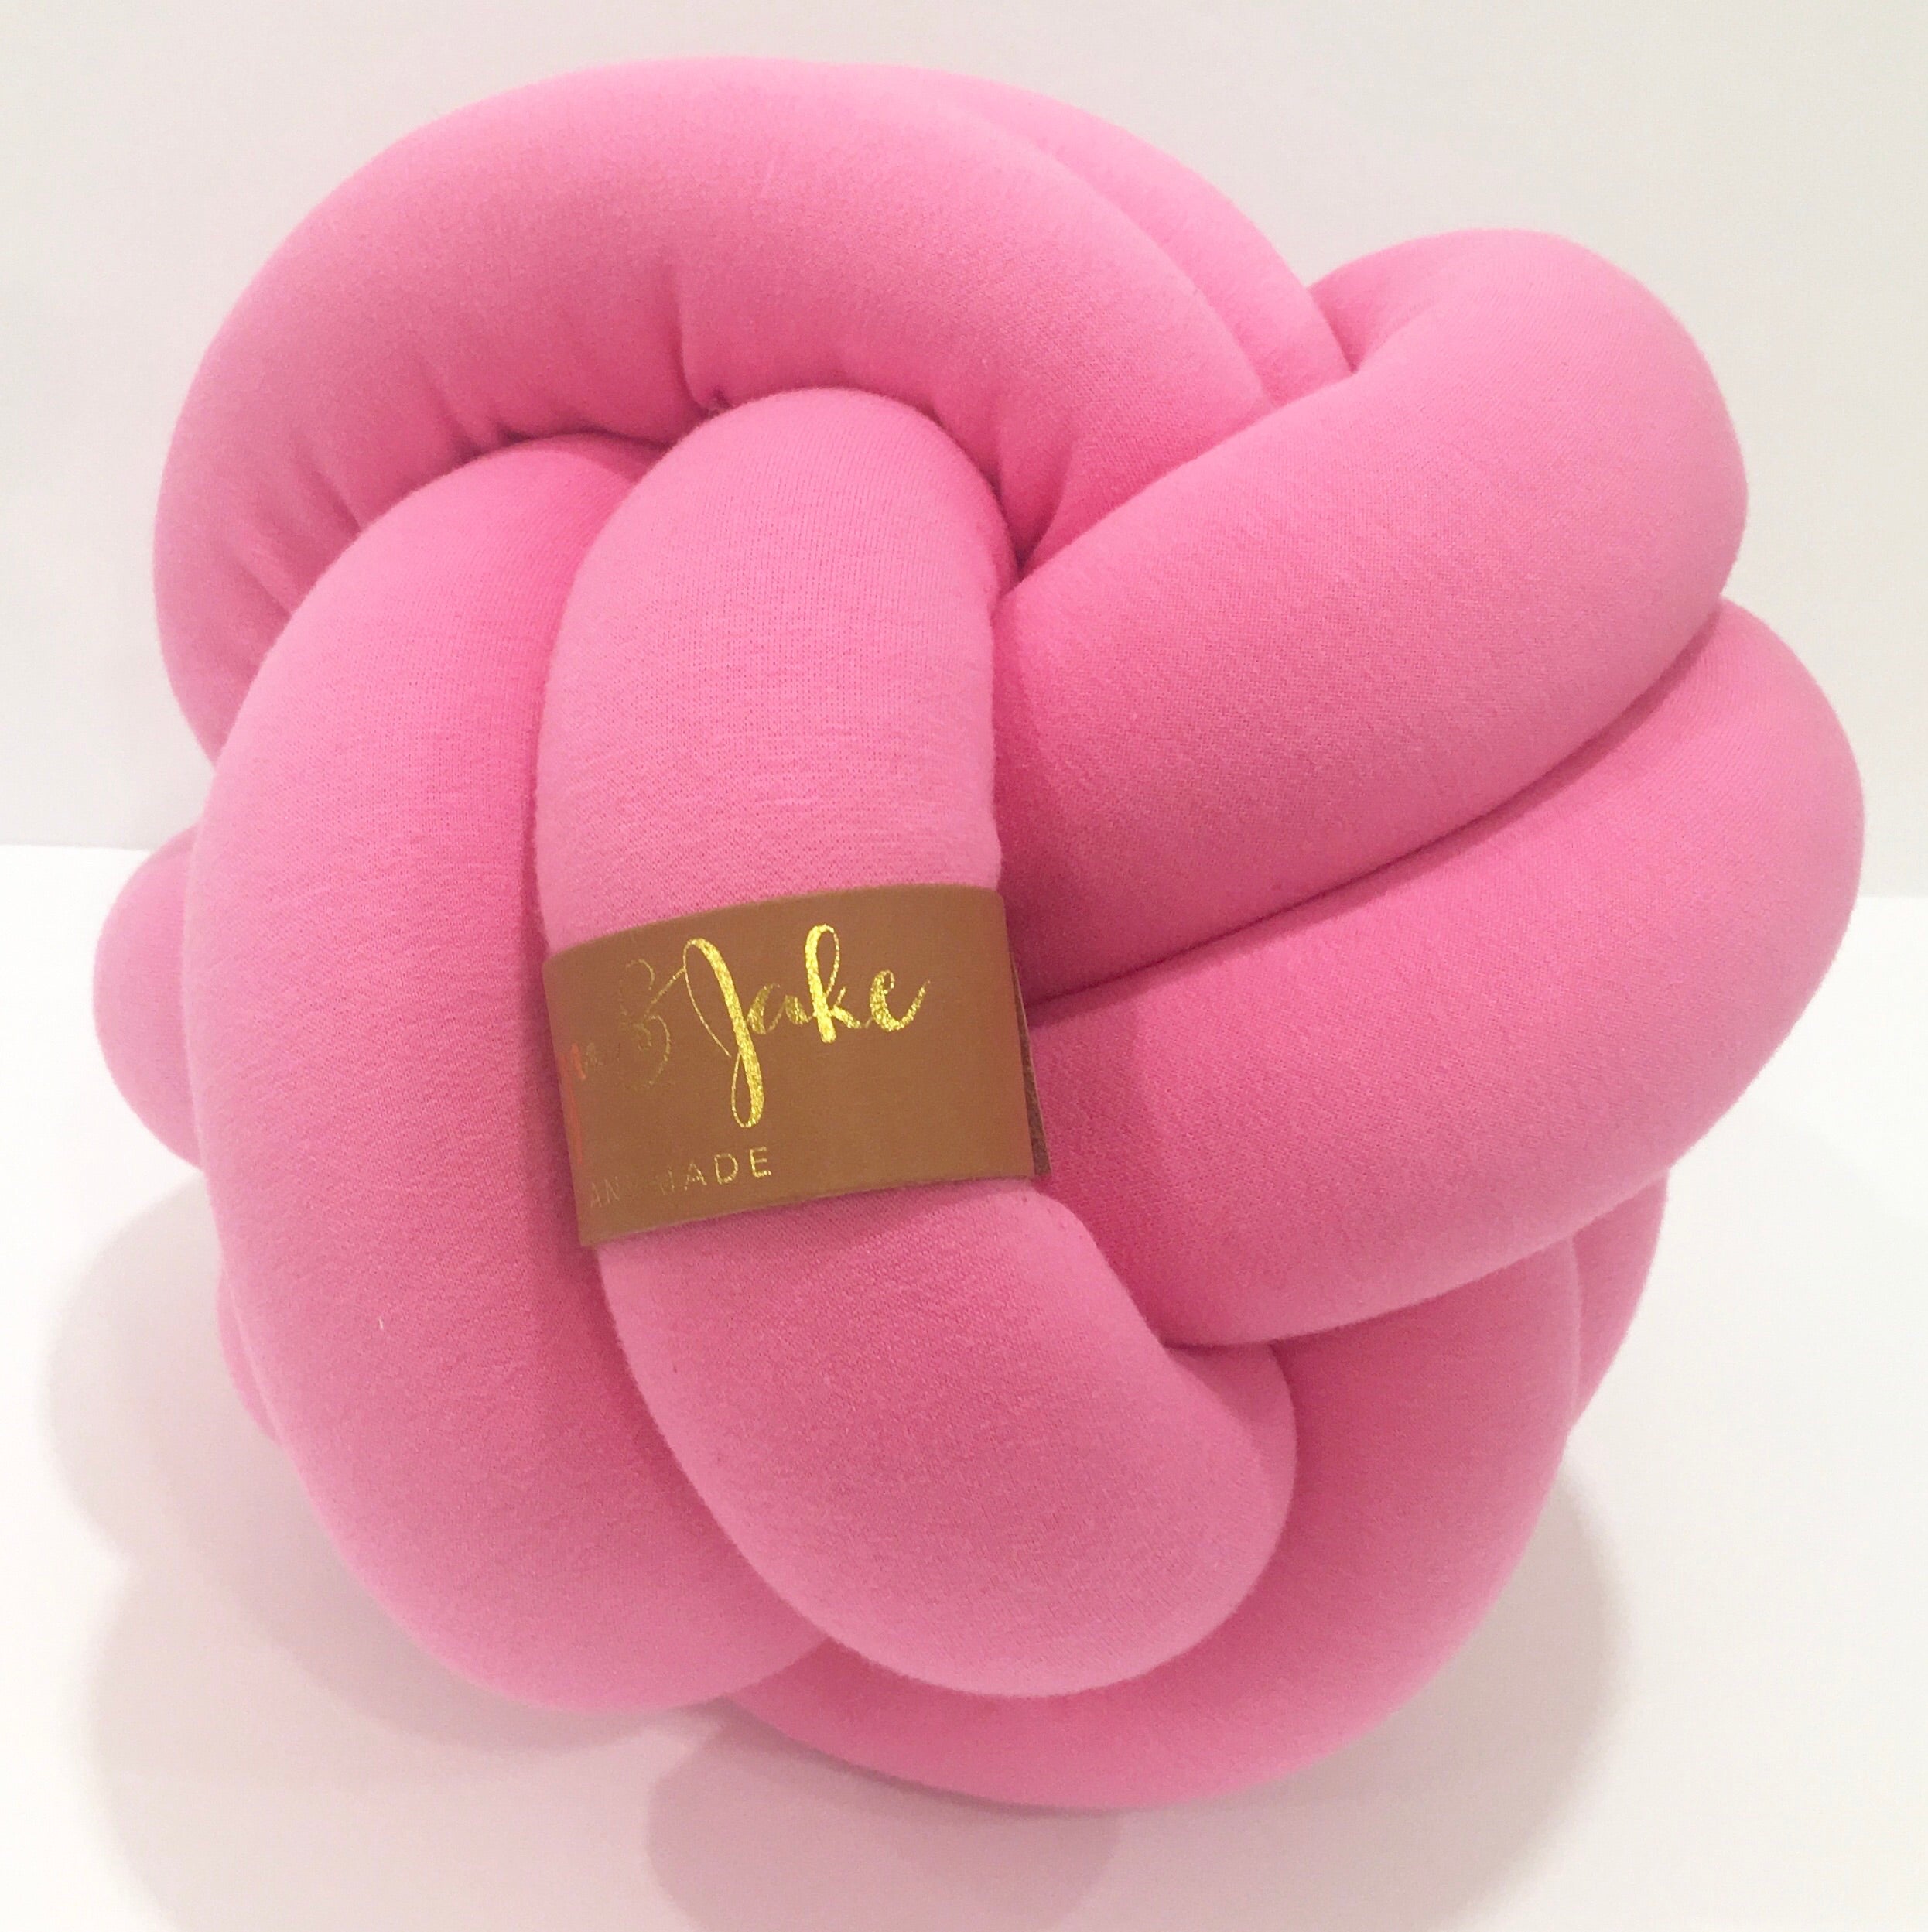 Hibiscus | Medium Sphere Knot Pillow - See more Knot Pillows & Cushions at JujuAndJake.com